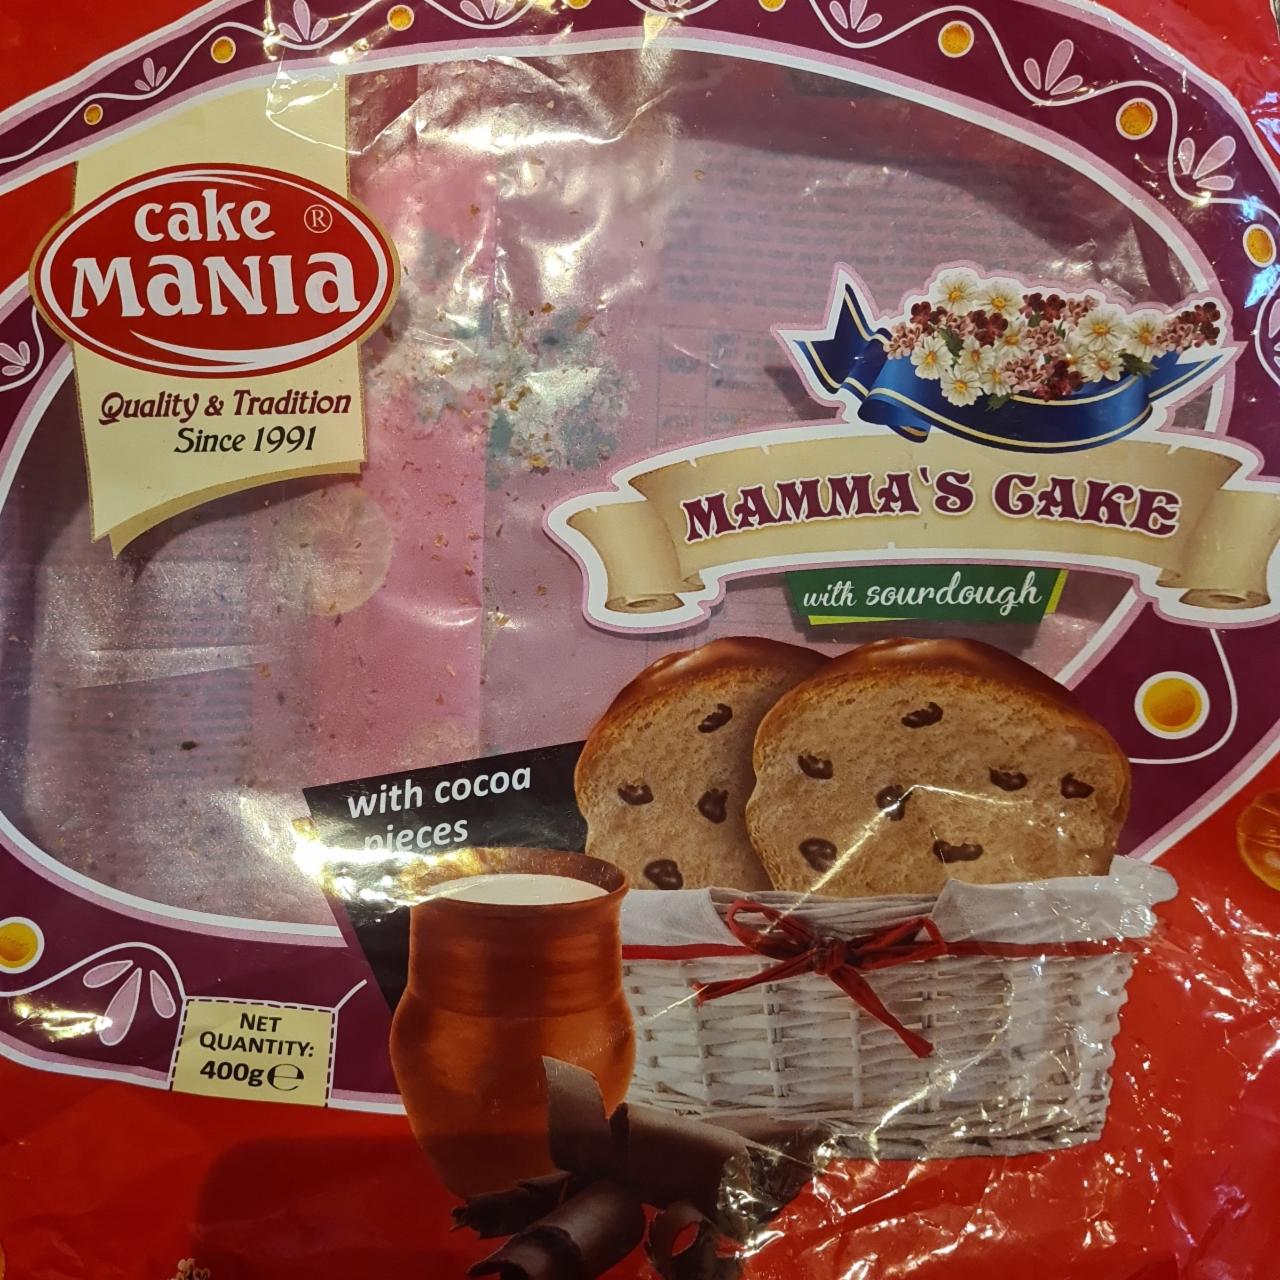 Fotografie - Mamma's Cake with cocoa pieces Cake mania